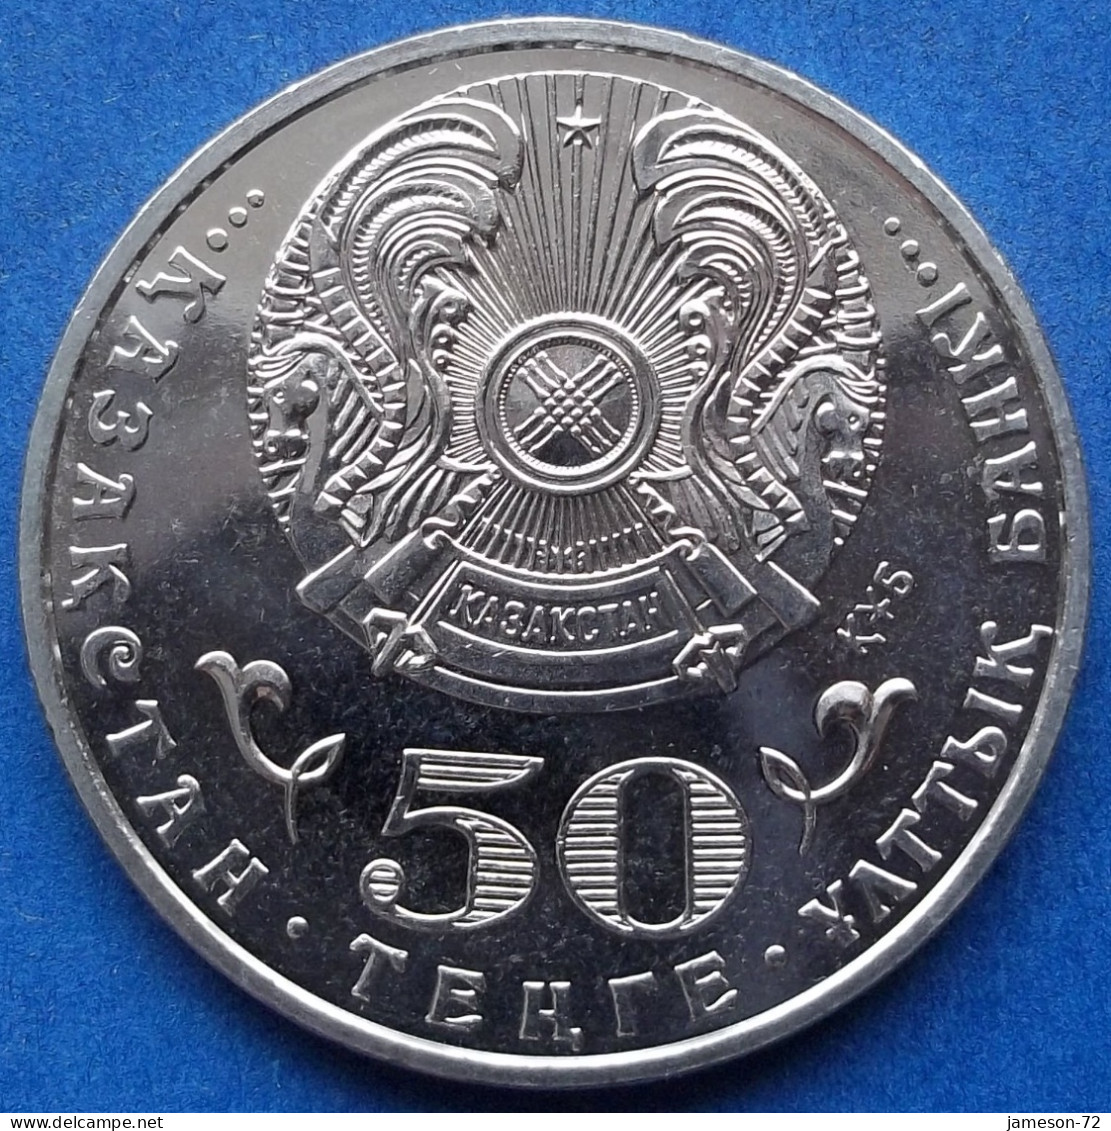 KAZAKHSTAN - 50 Tenge 2015 "100th Anniversary - Malik Gabullin" KM# 316 Independent Republic (1991) - Edelweiss Coins - Kazakhstan